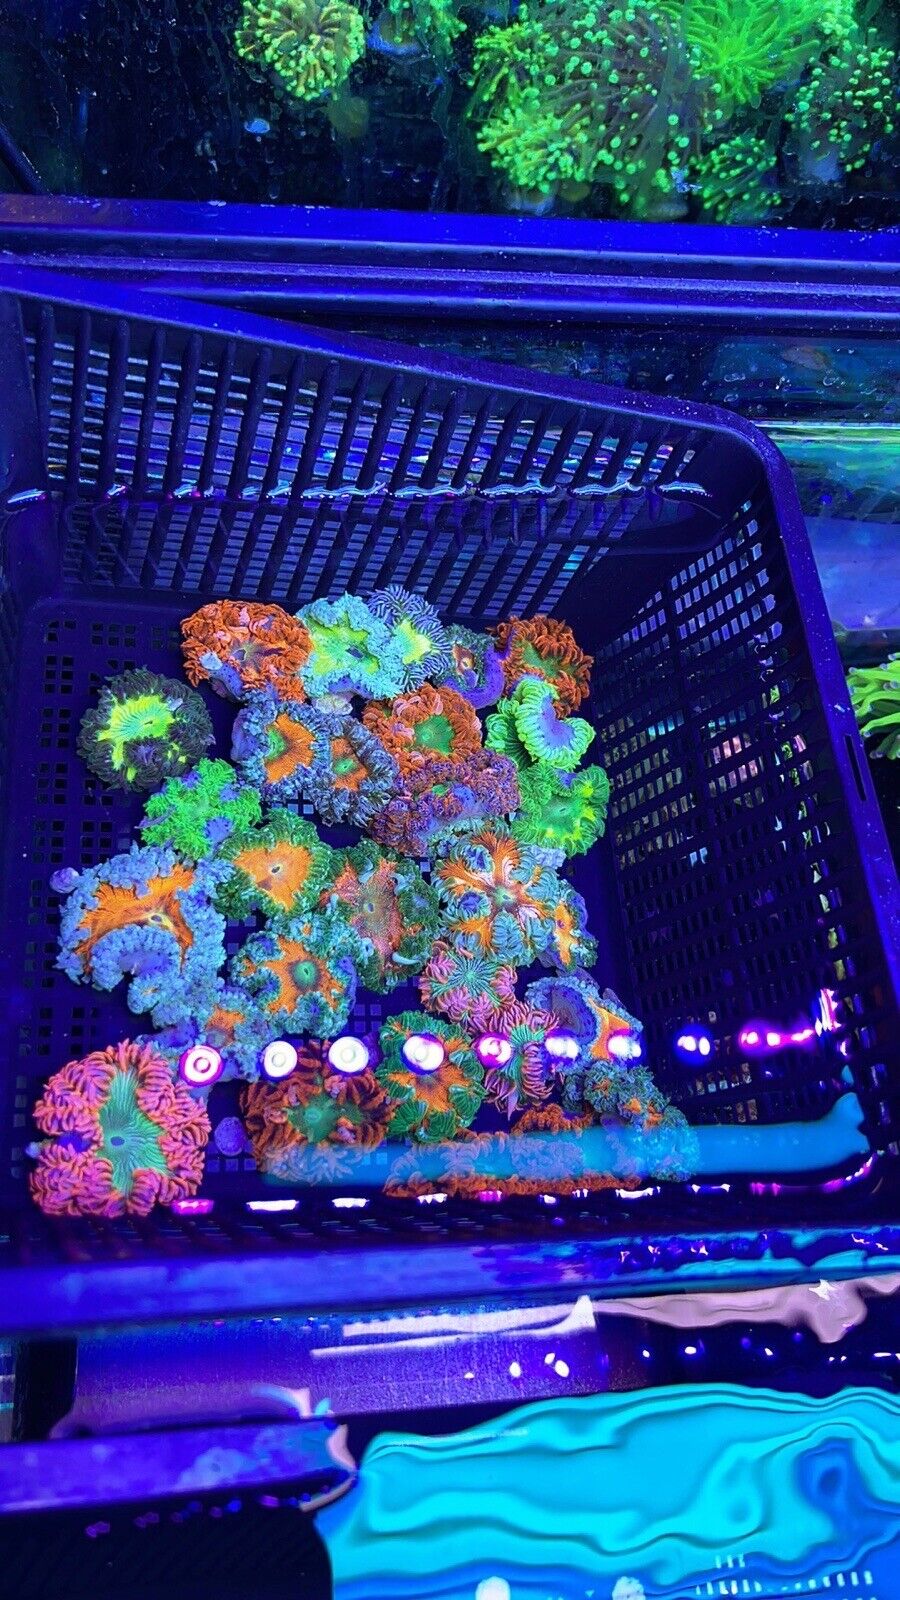 20 Pack Ultra Rock Flower Anemone RFA Rainbow Nem Live Coral Frag LPS SPS Florid